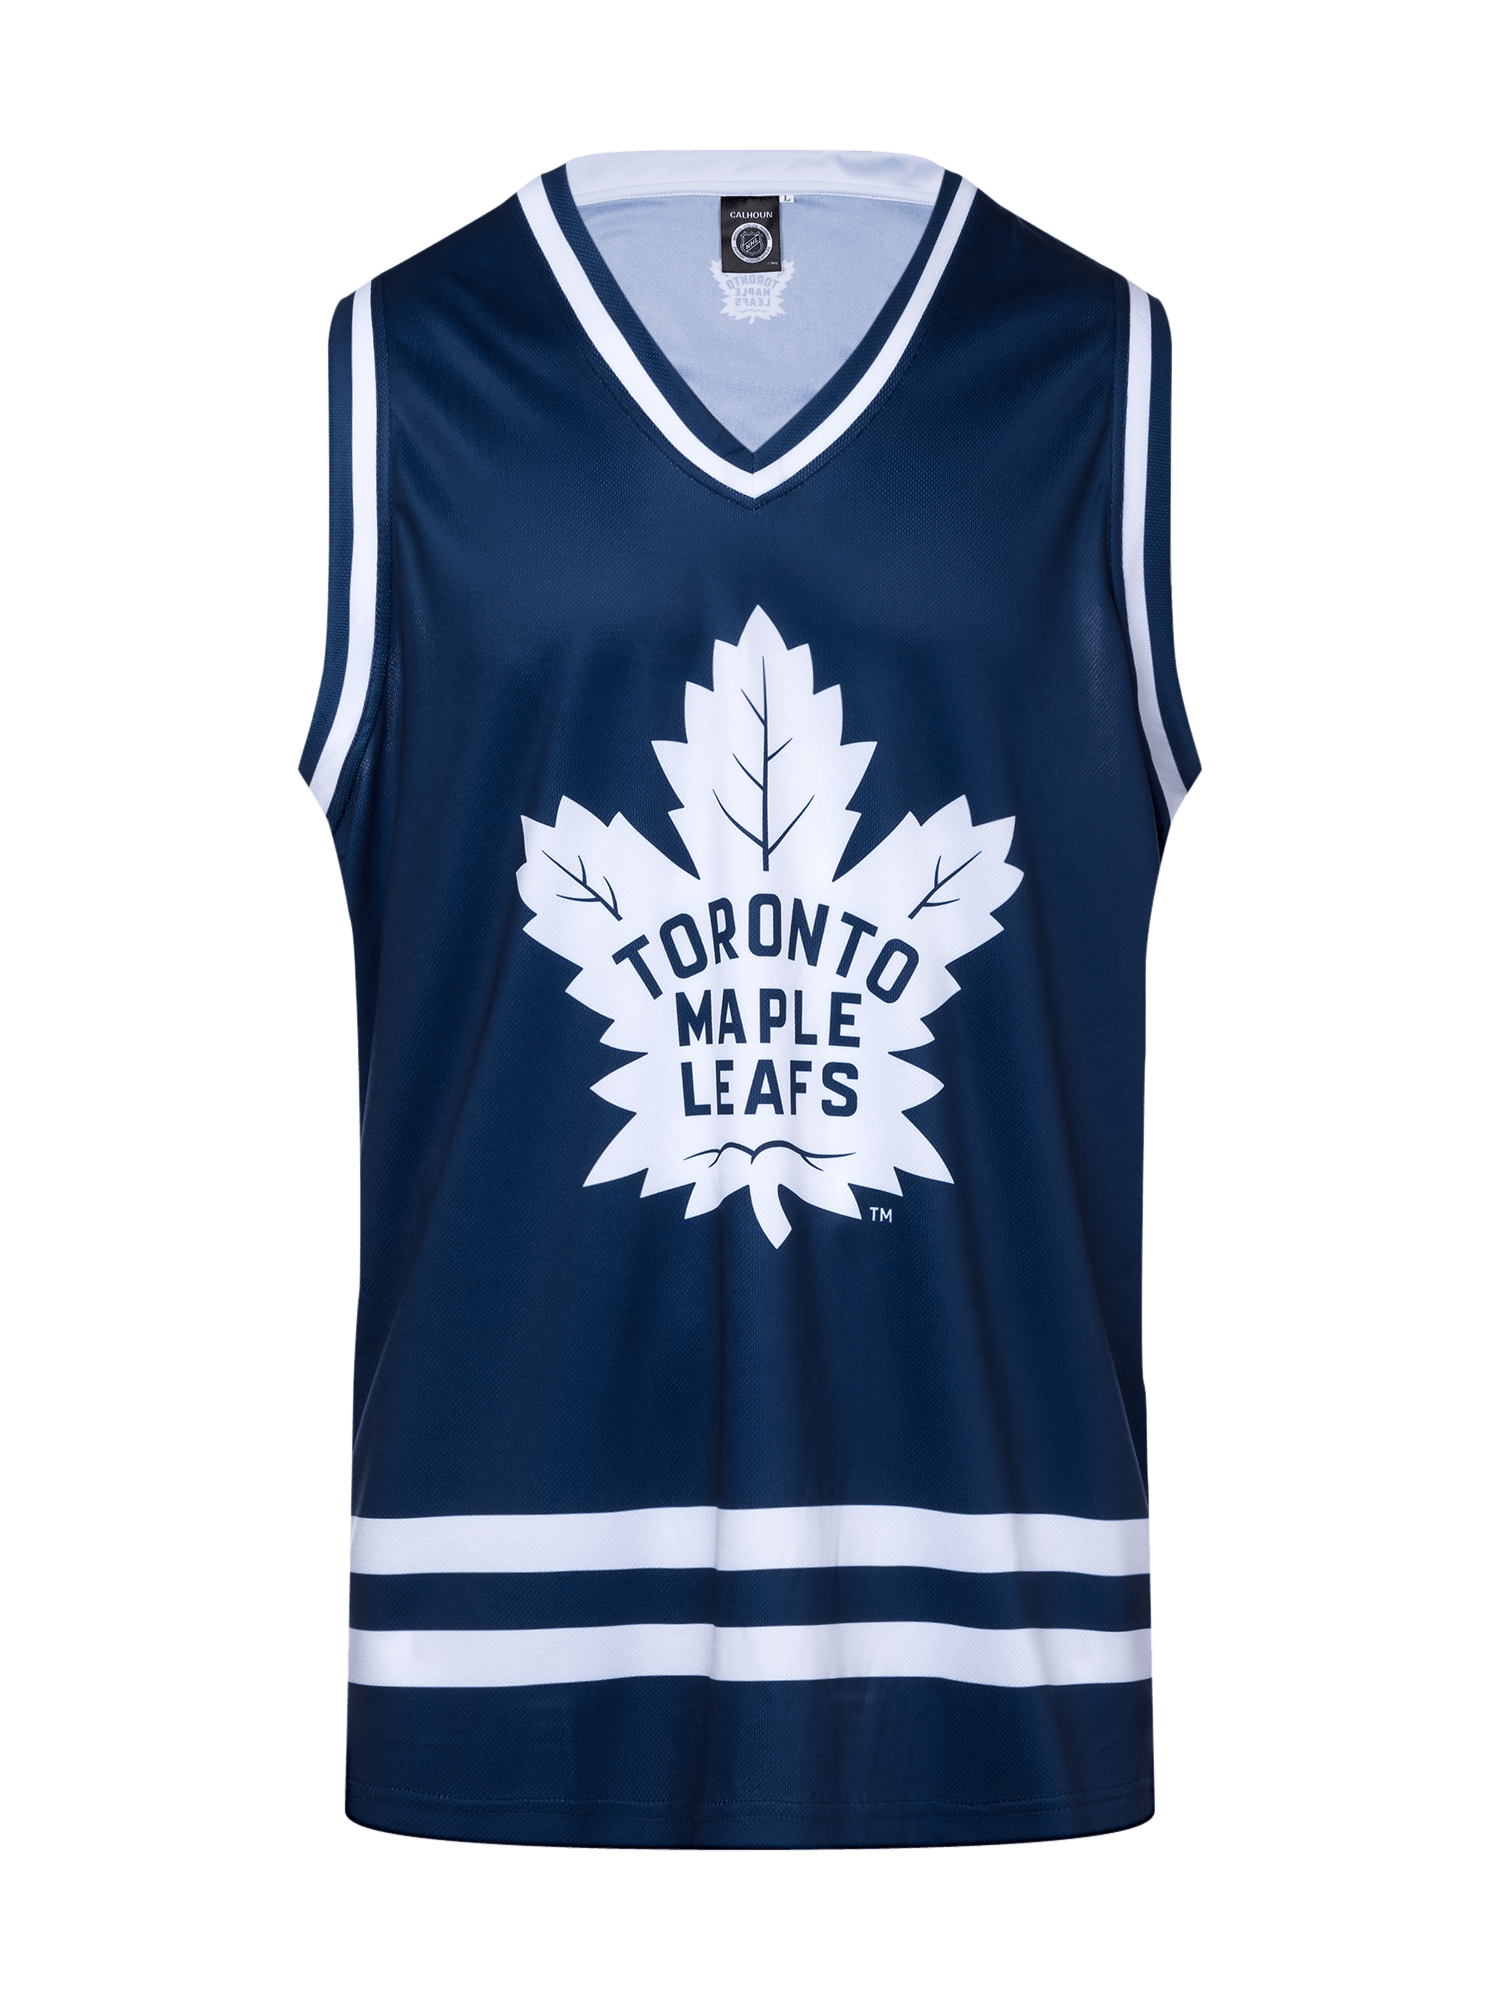 maple leaf jerseys for sale